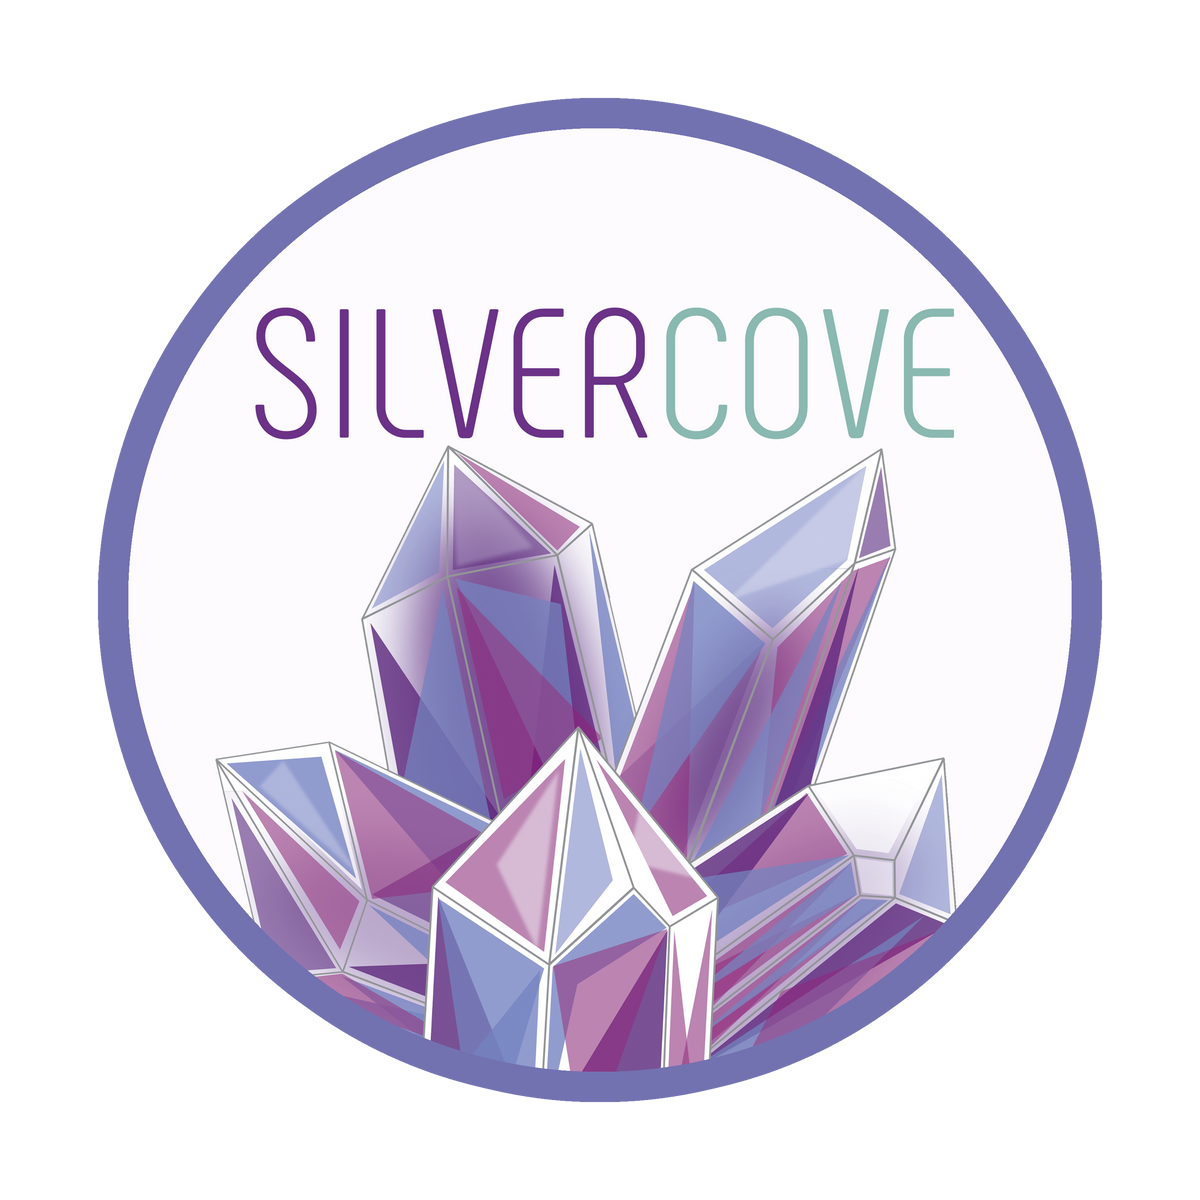 Silver Cove's Online Store – Silver Cove Ltd Online